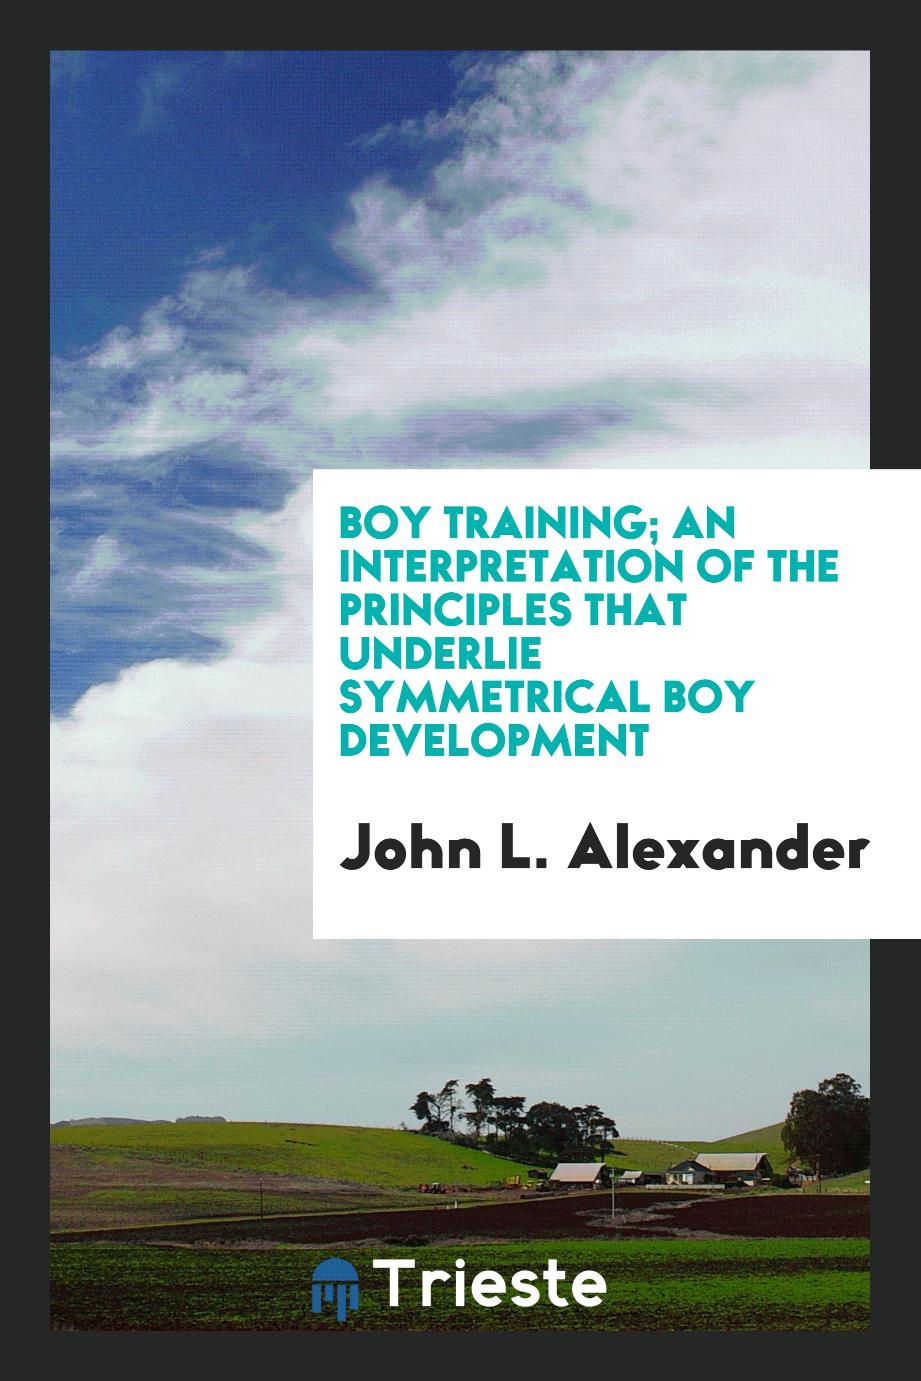 Boy training; an interpretation of the principles that underlie symmetrical boy development